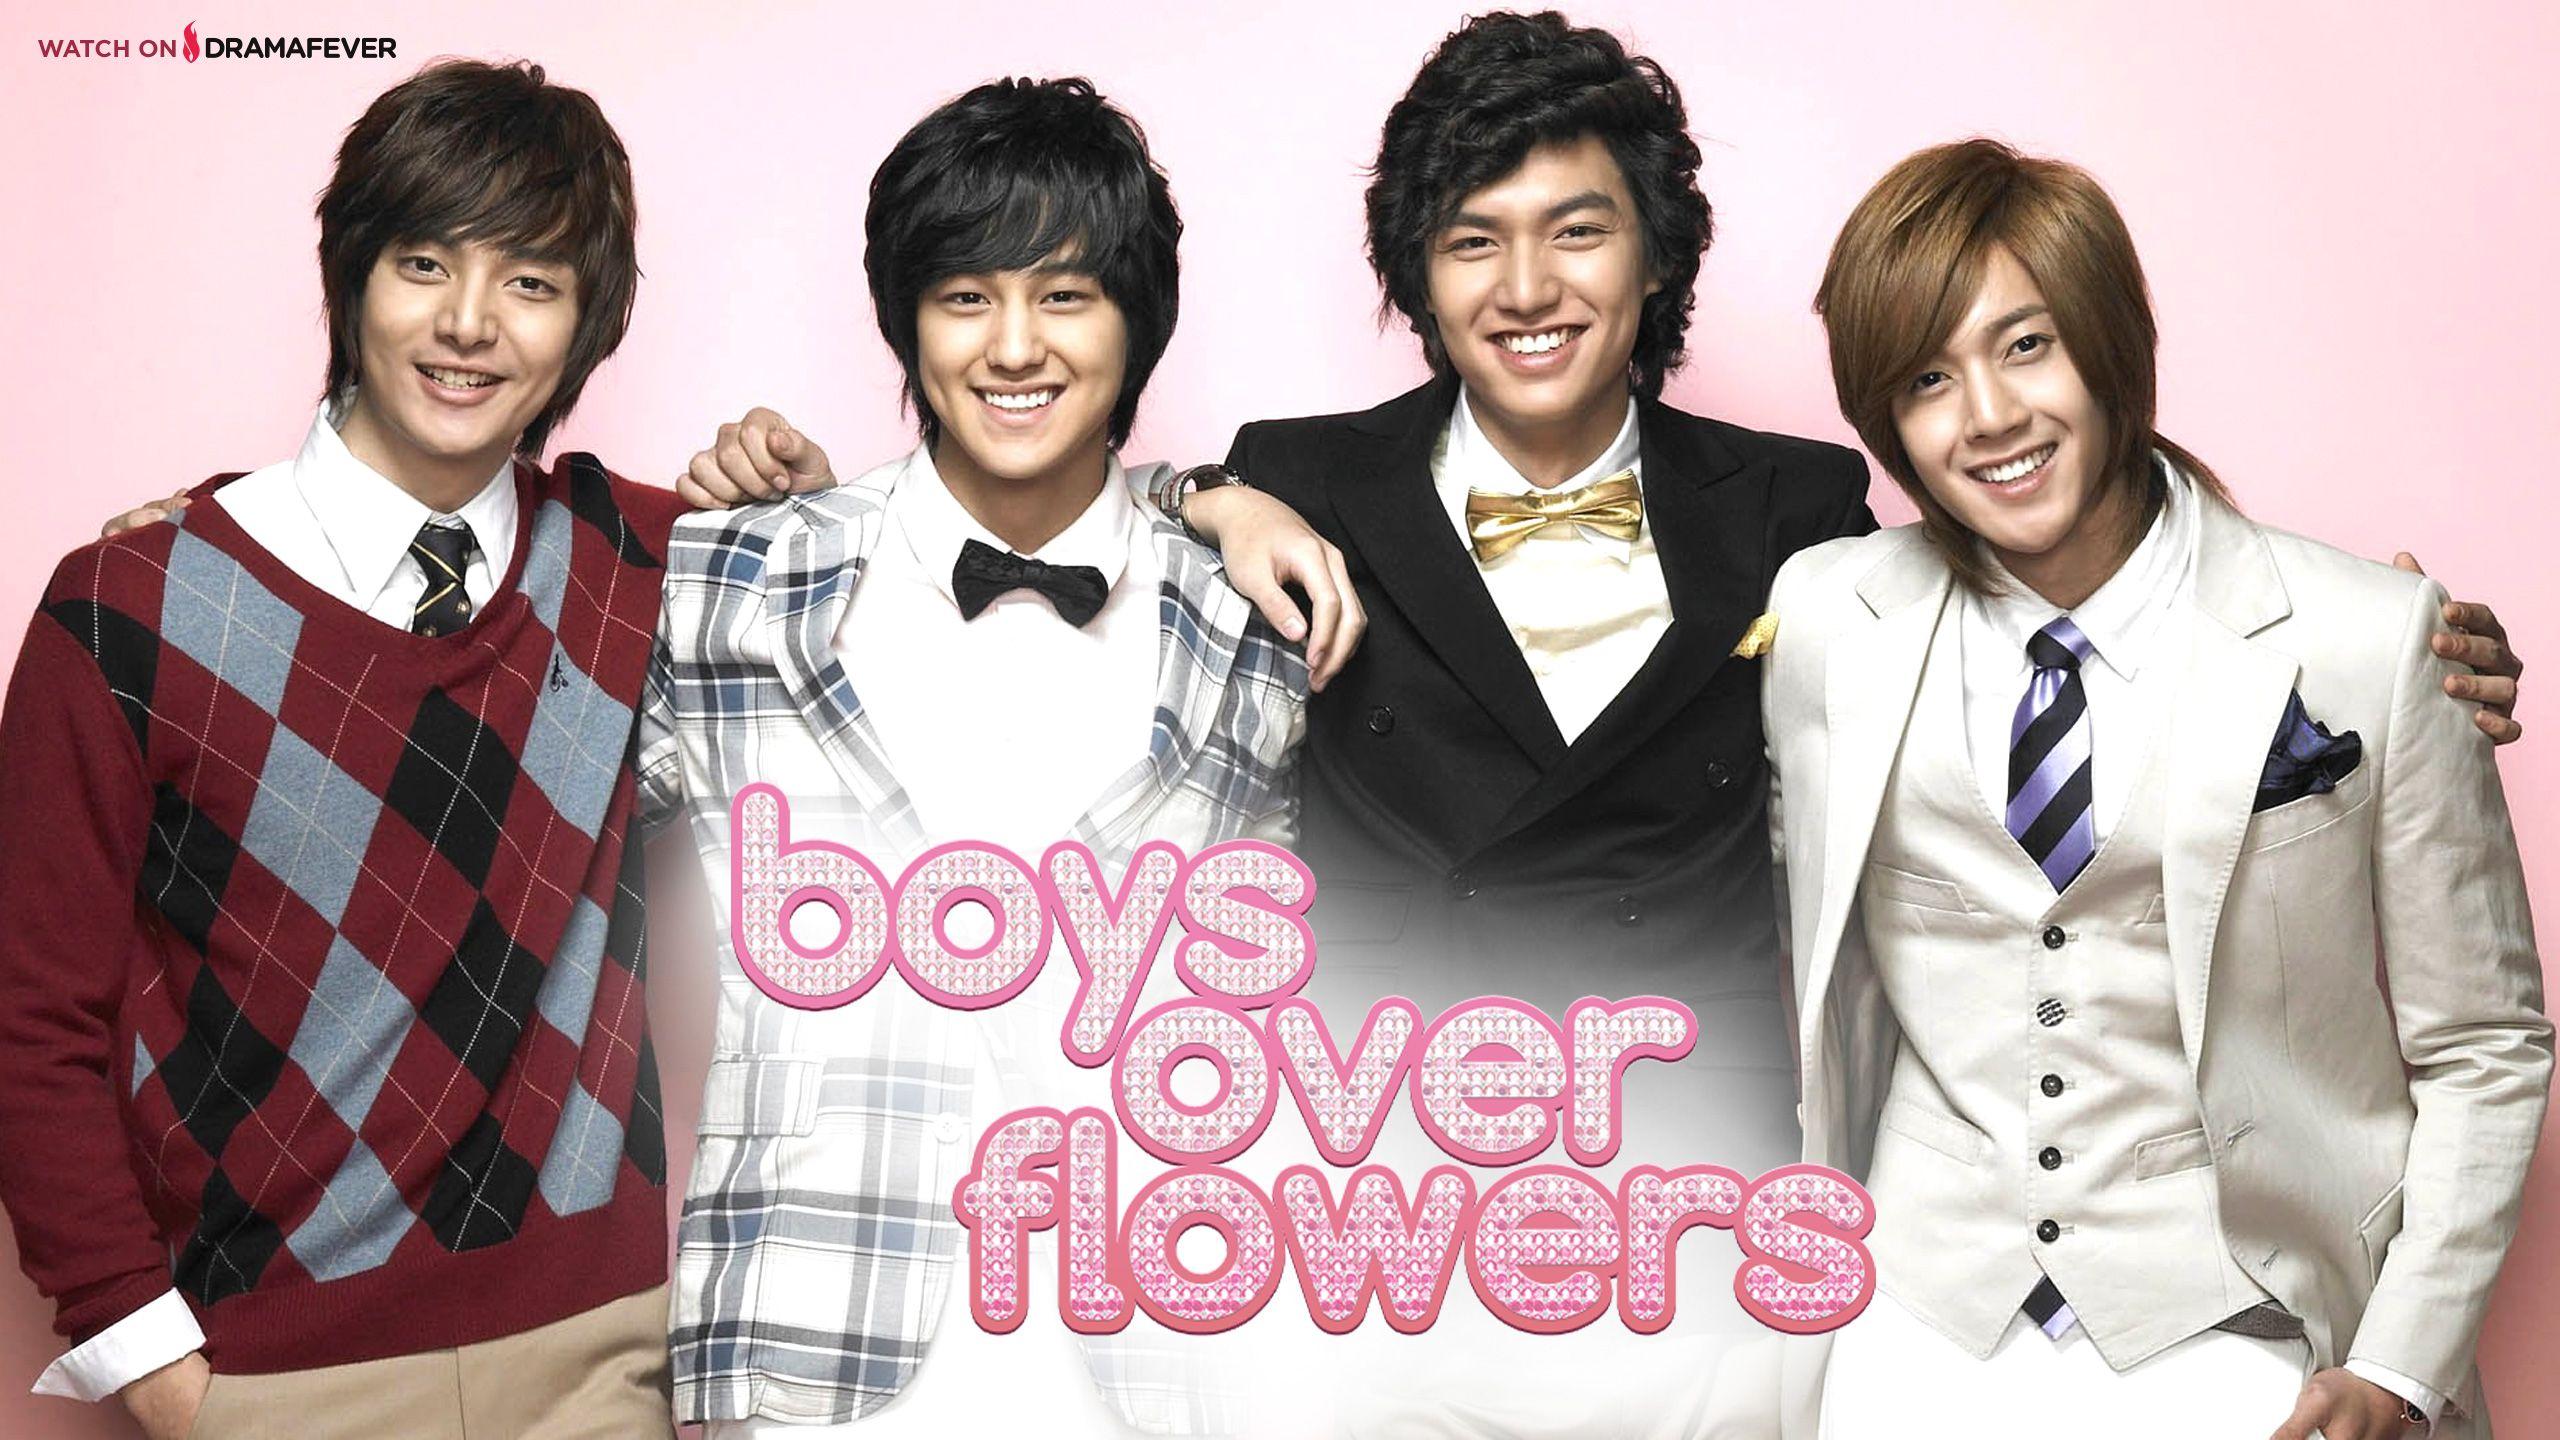 Download Boys Over Flowers wallpaper for your desktop, iPhone, iPad